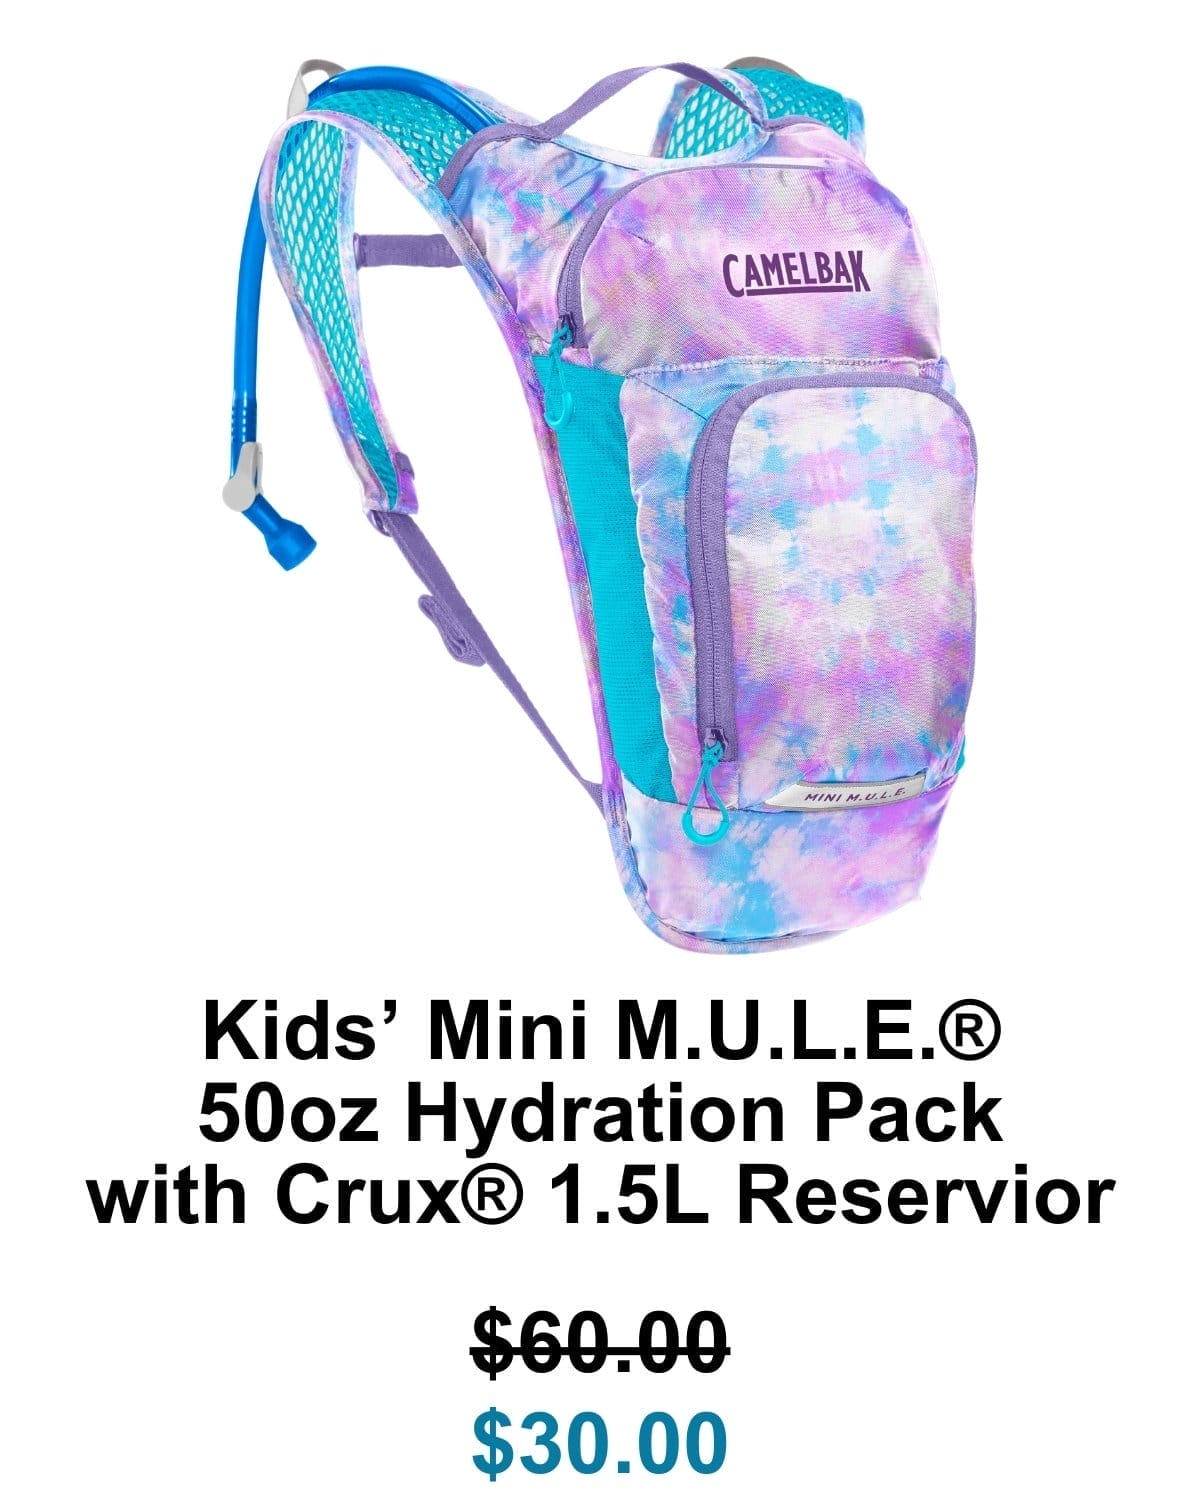 Kids' Mini M.U.L.E.® 50oz Hydration Pack with Crux® 1.5L Reservoir